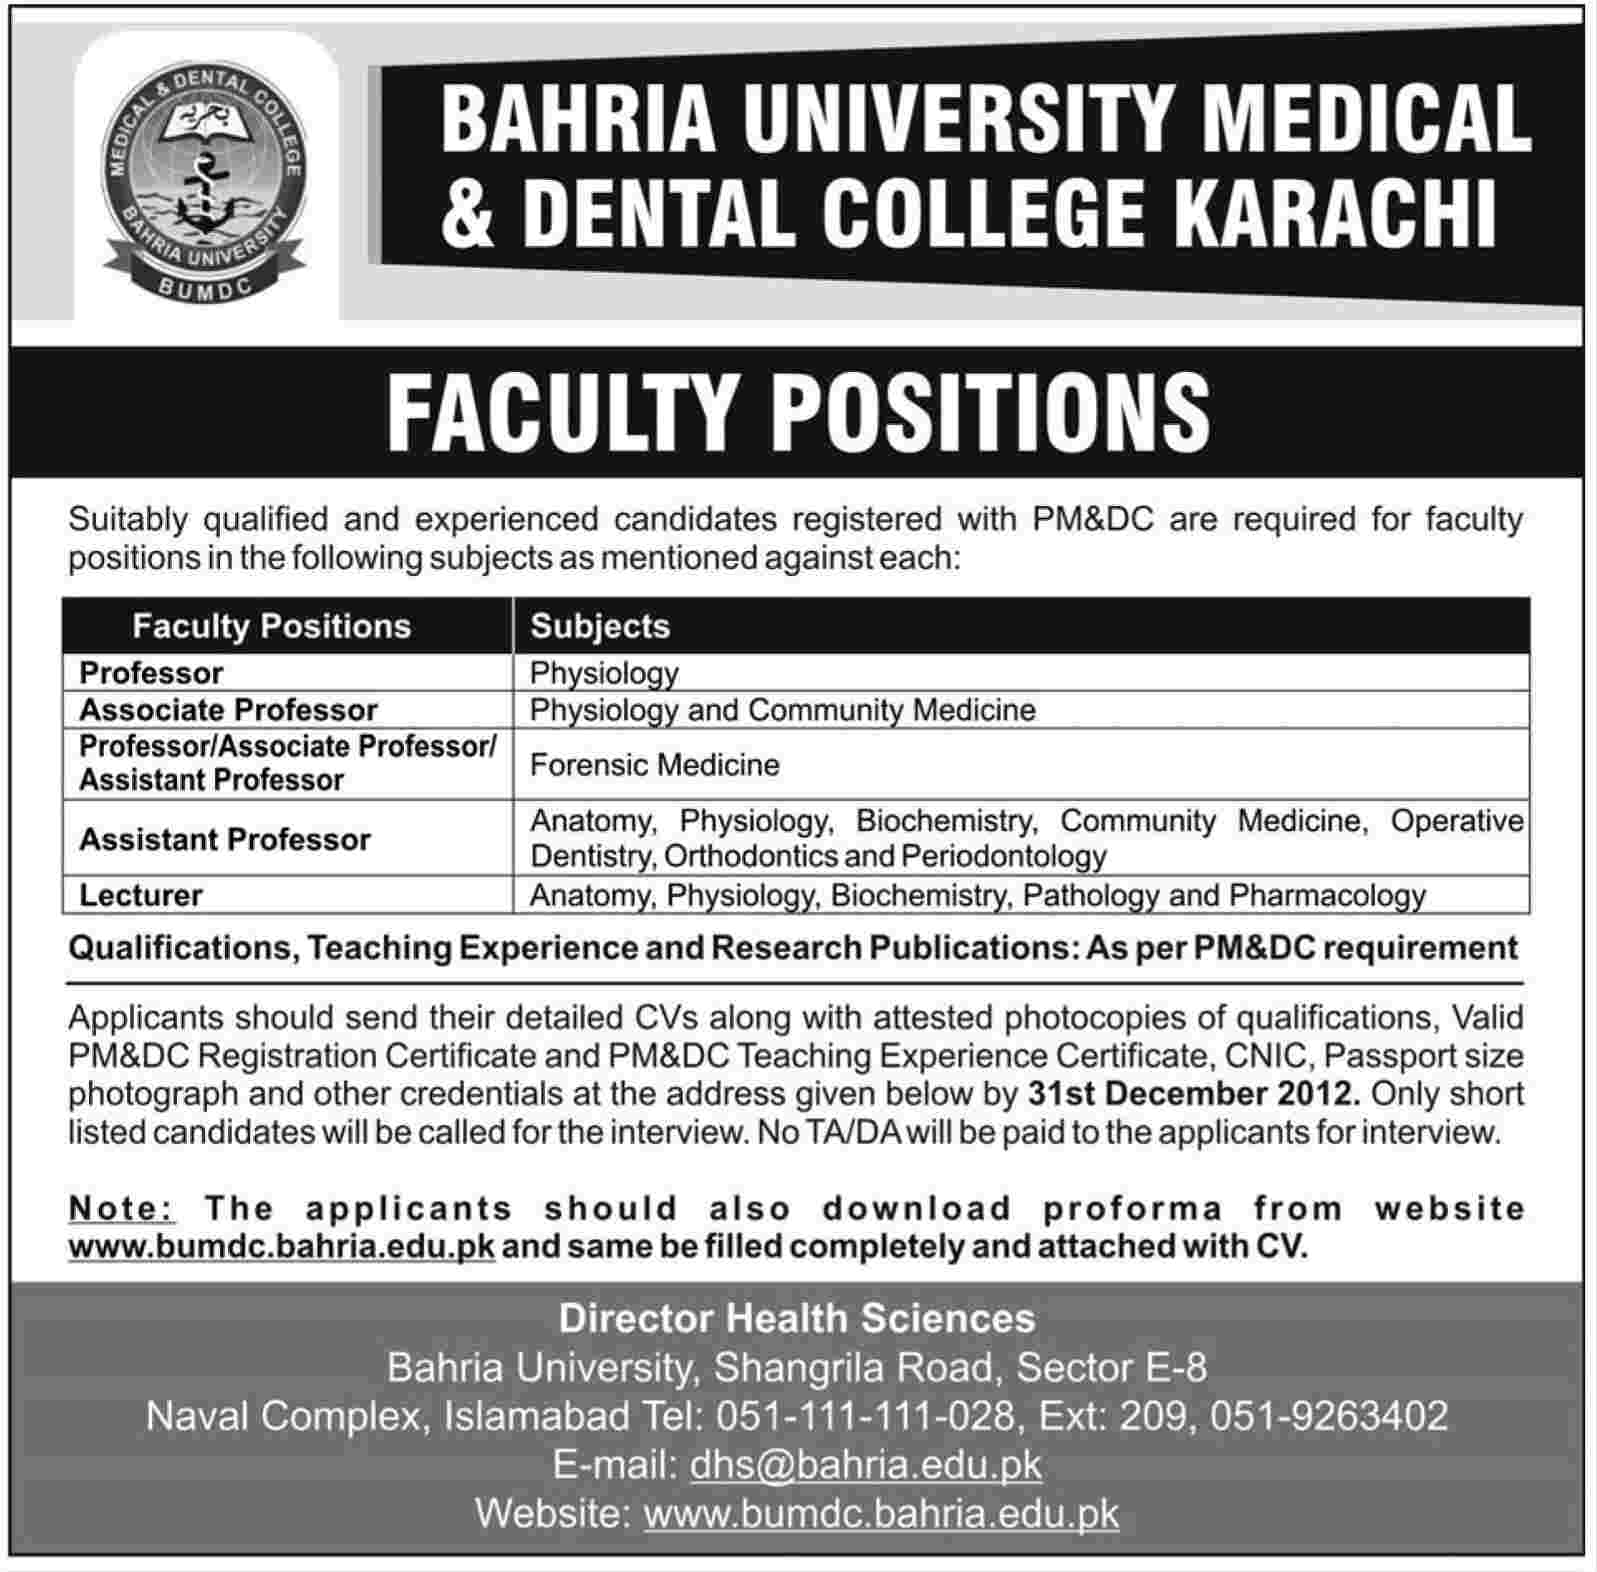 Bahria University Medical & Dental College Karachi Jobs 2012 for Faculty